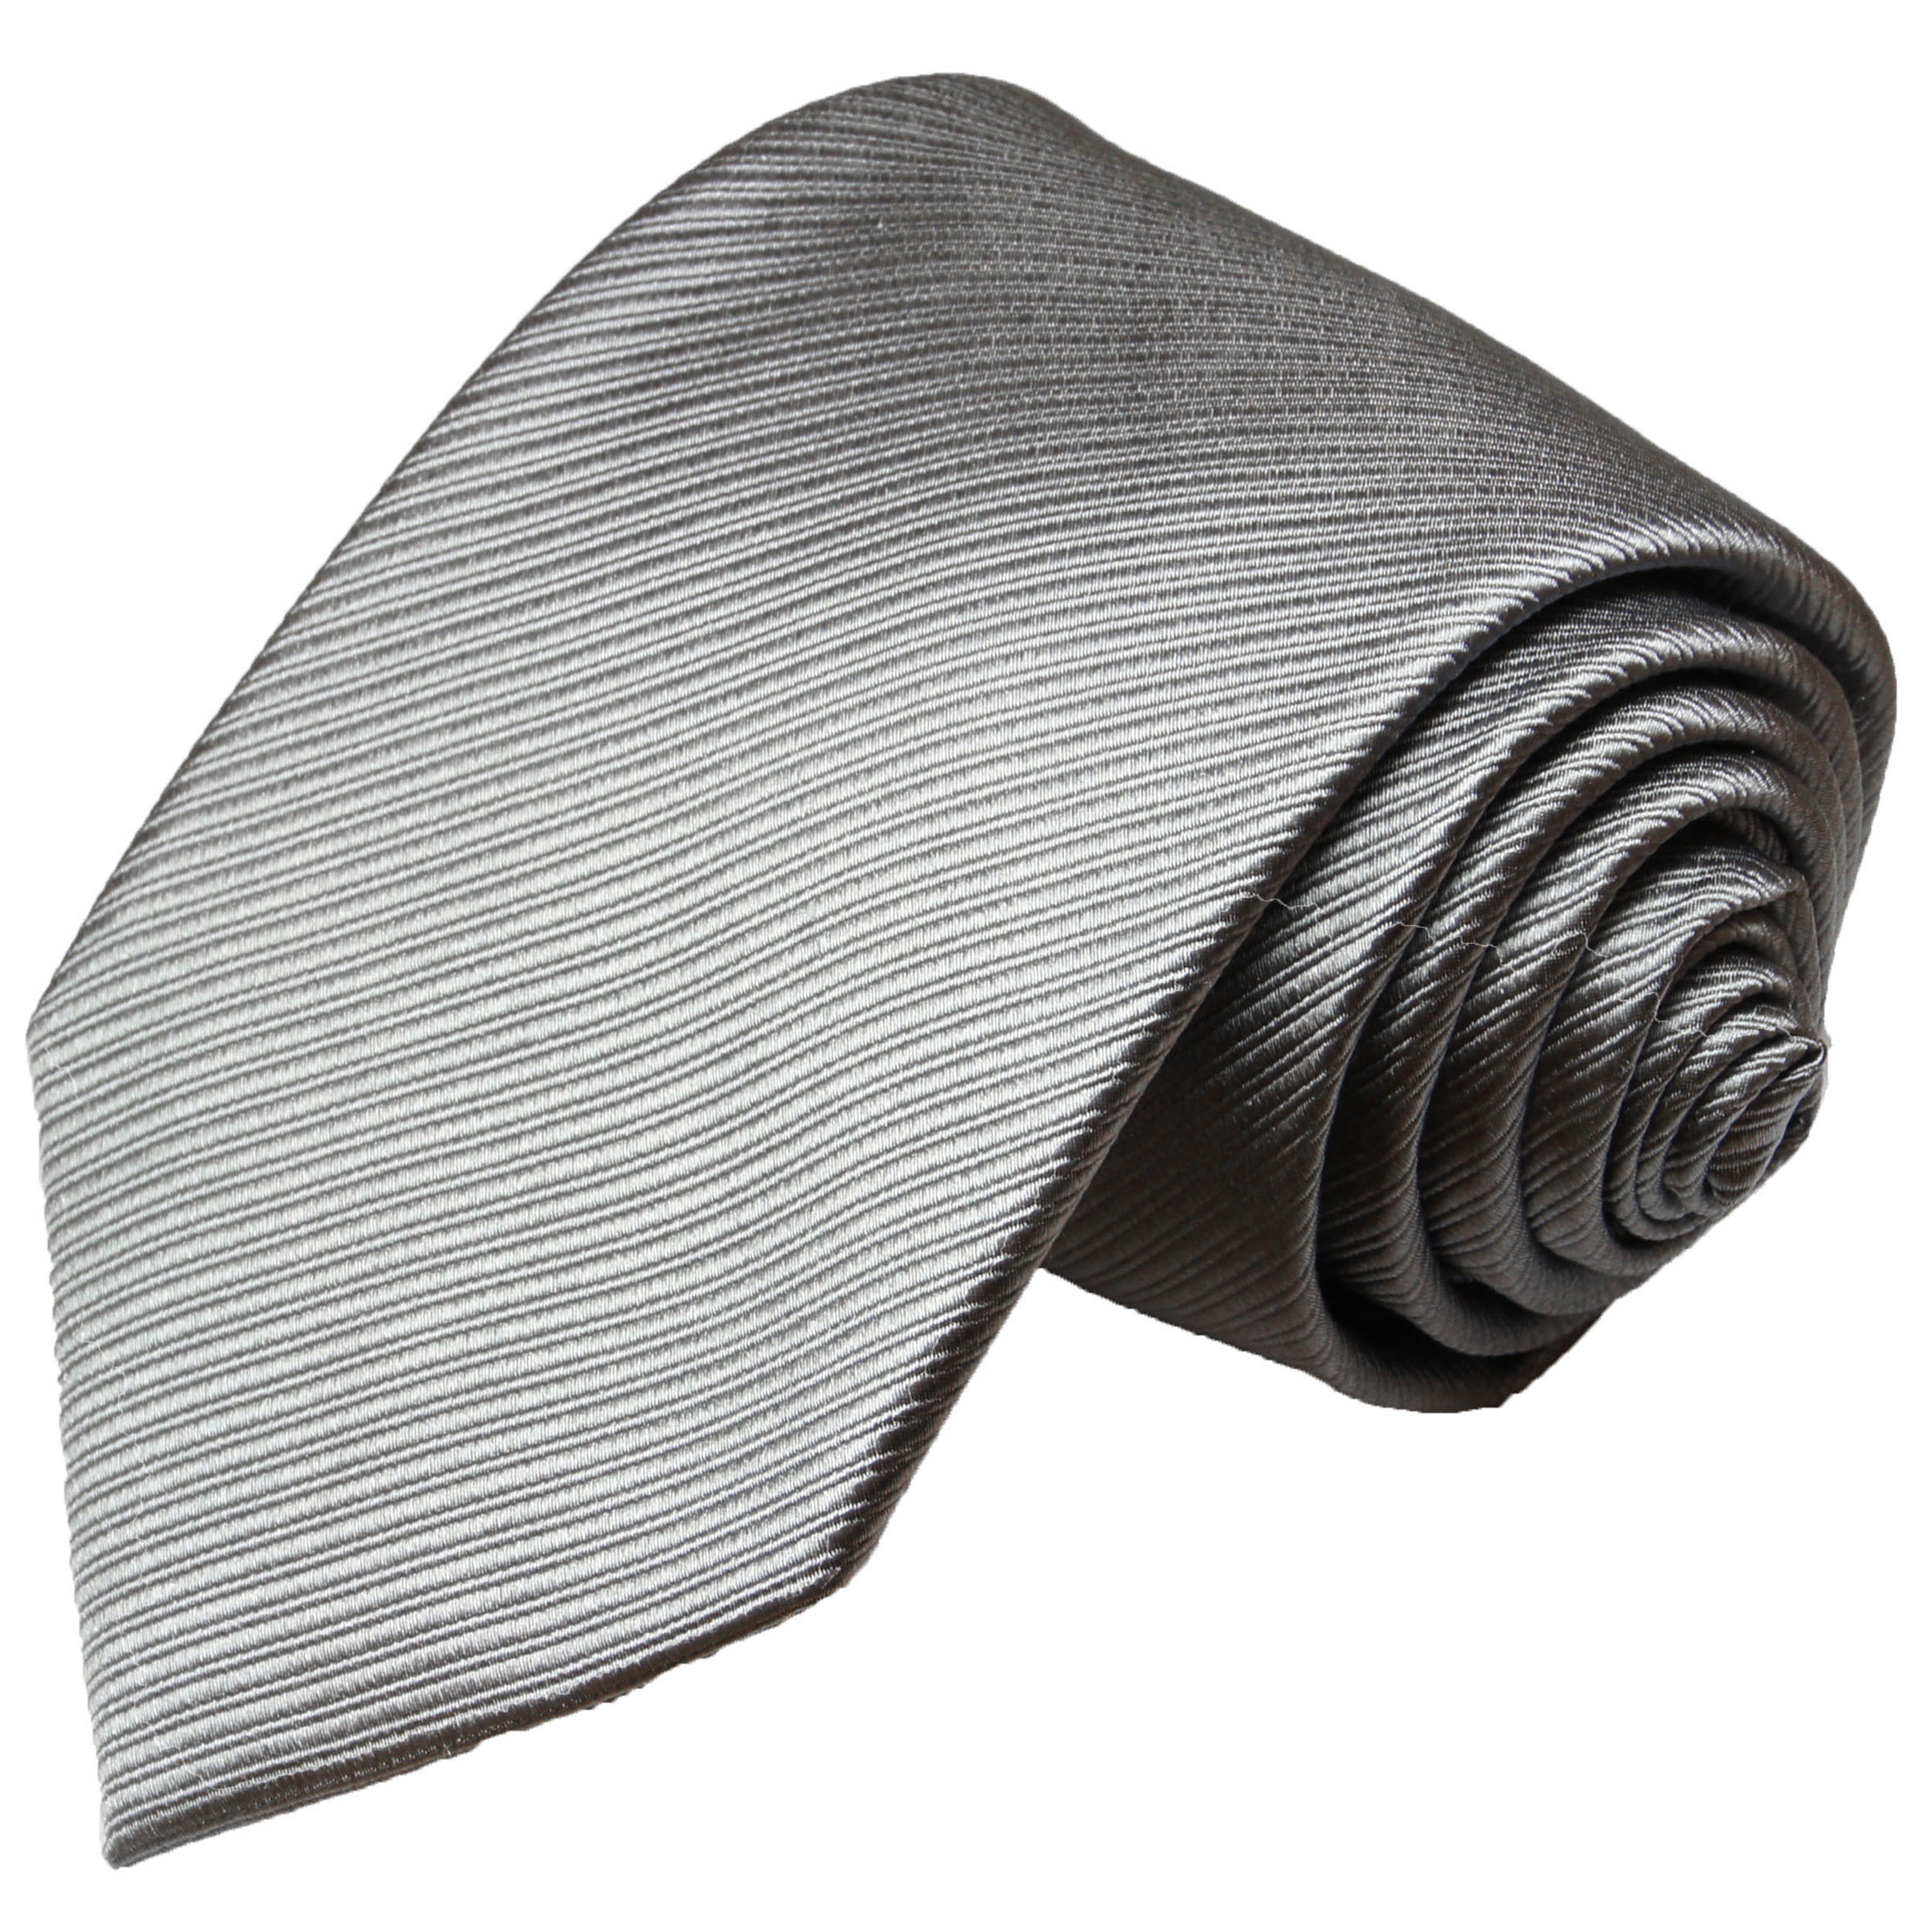 Krawatte silber grau JETZT | 977 Malone uni Shop Paul BESTELLEN 